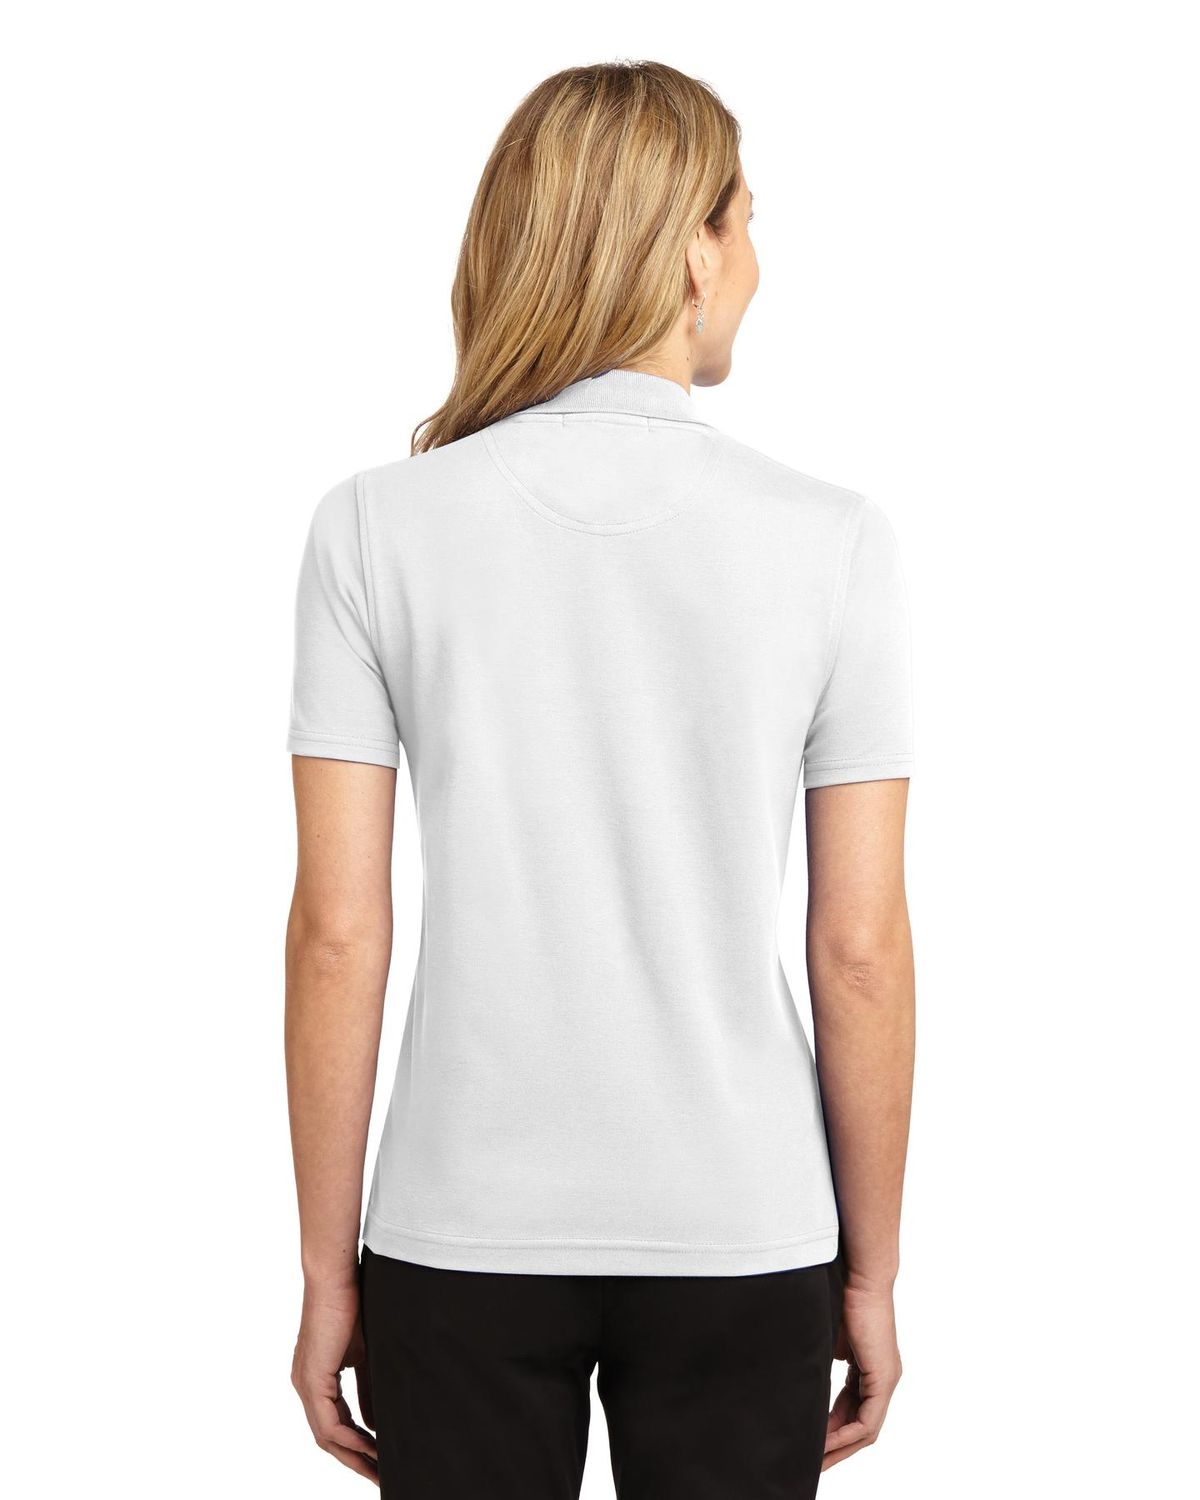 'Port Authority L455 Ladies Rapid Dry Sport Shirt'